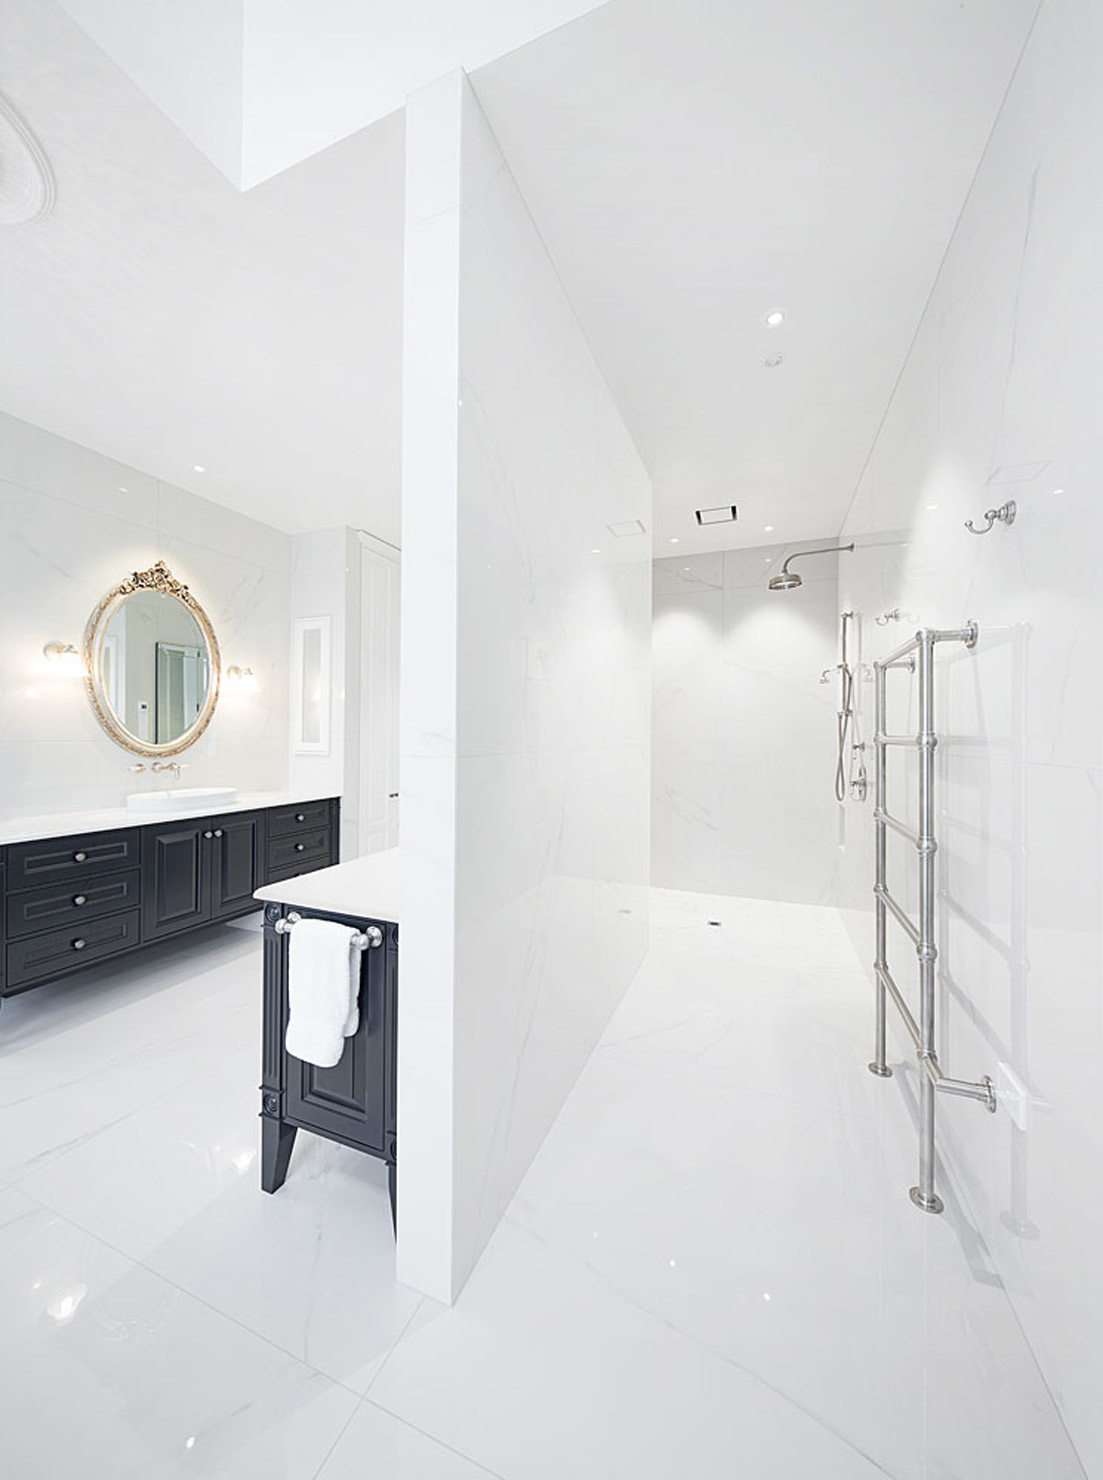 ingrid geldof NKBA Overall Bathroom of the Year ensuite, wardrobe and kitchen design